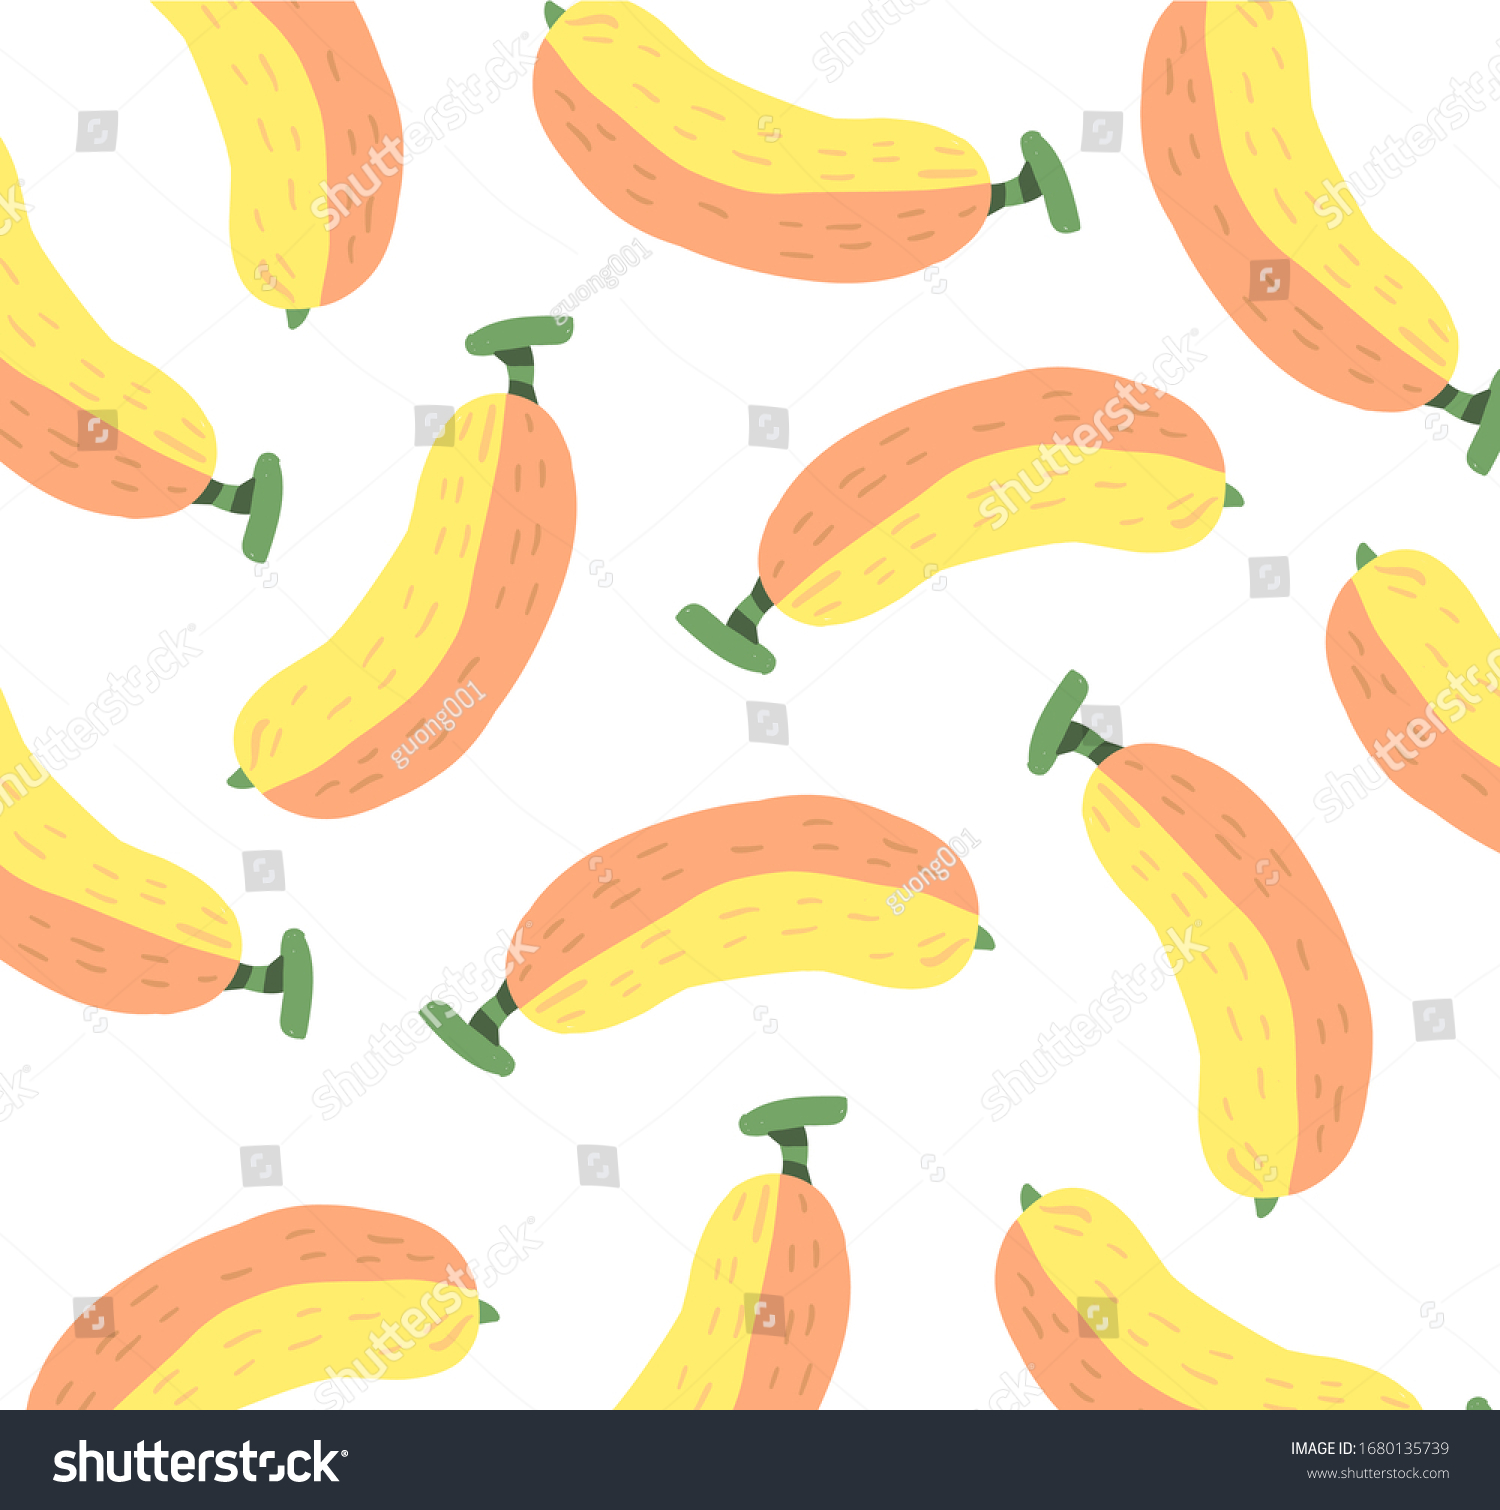 Banana Isolated Doodle Banana Isolated Vector Stock Vector Royalty Free Shutterstock